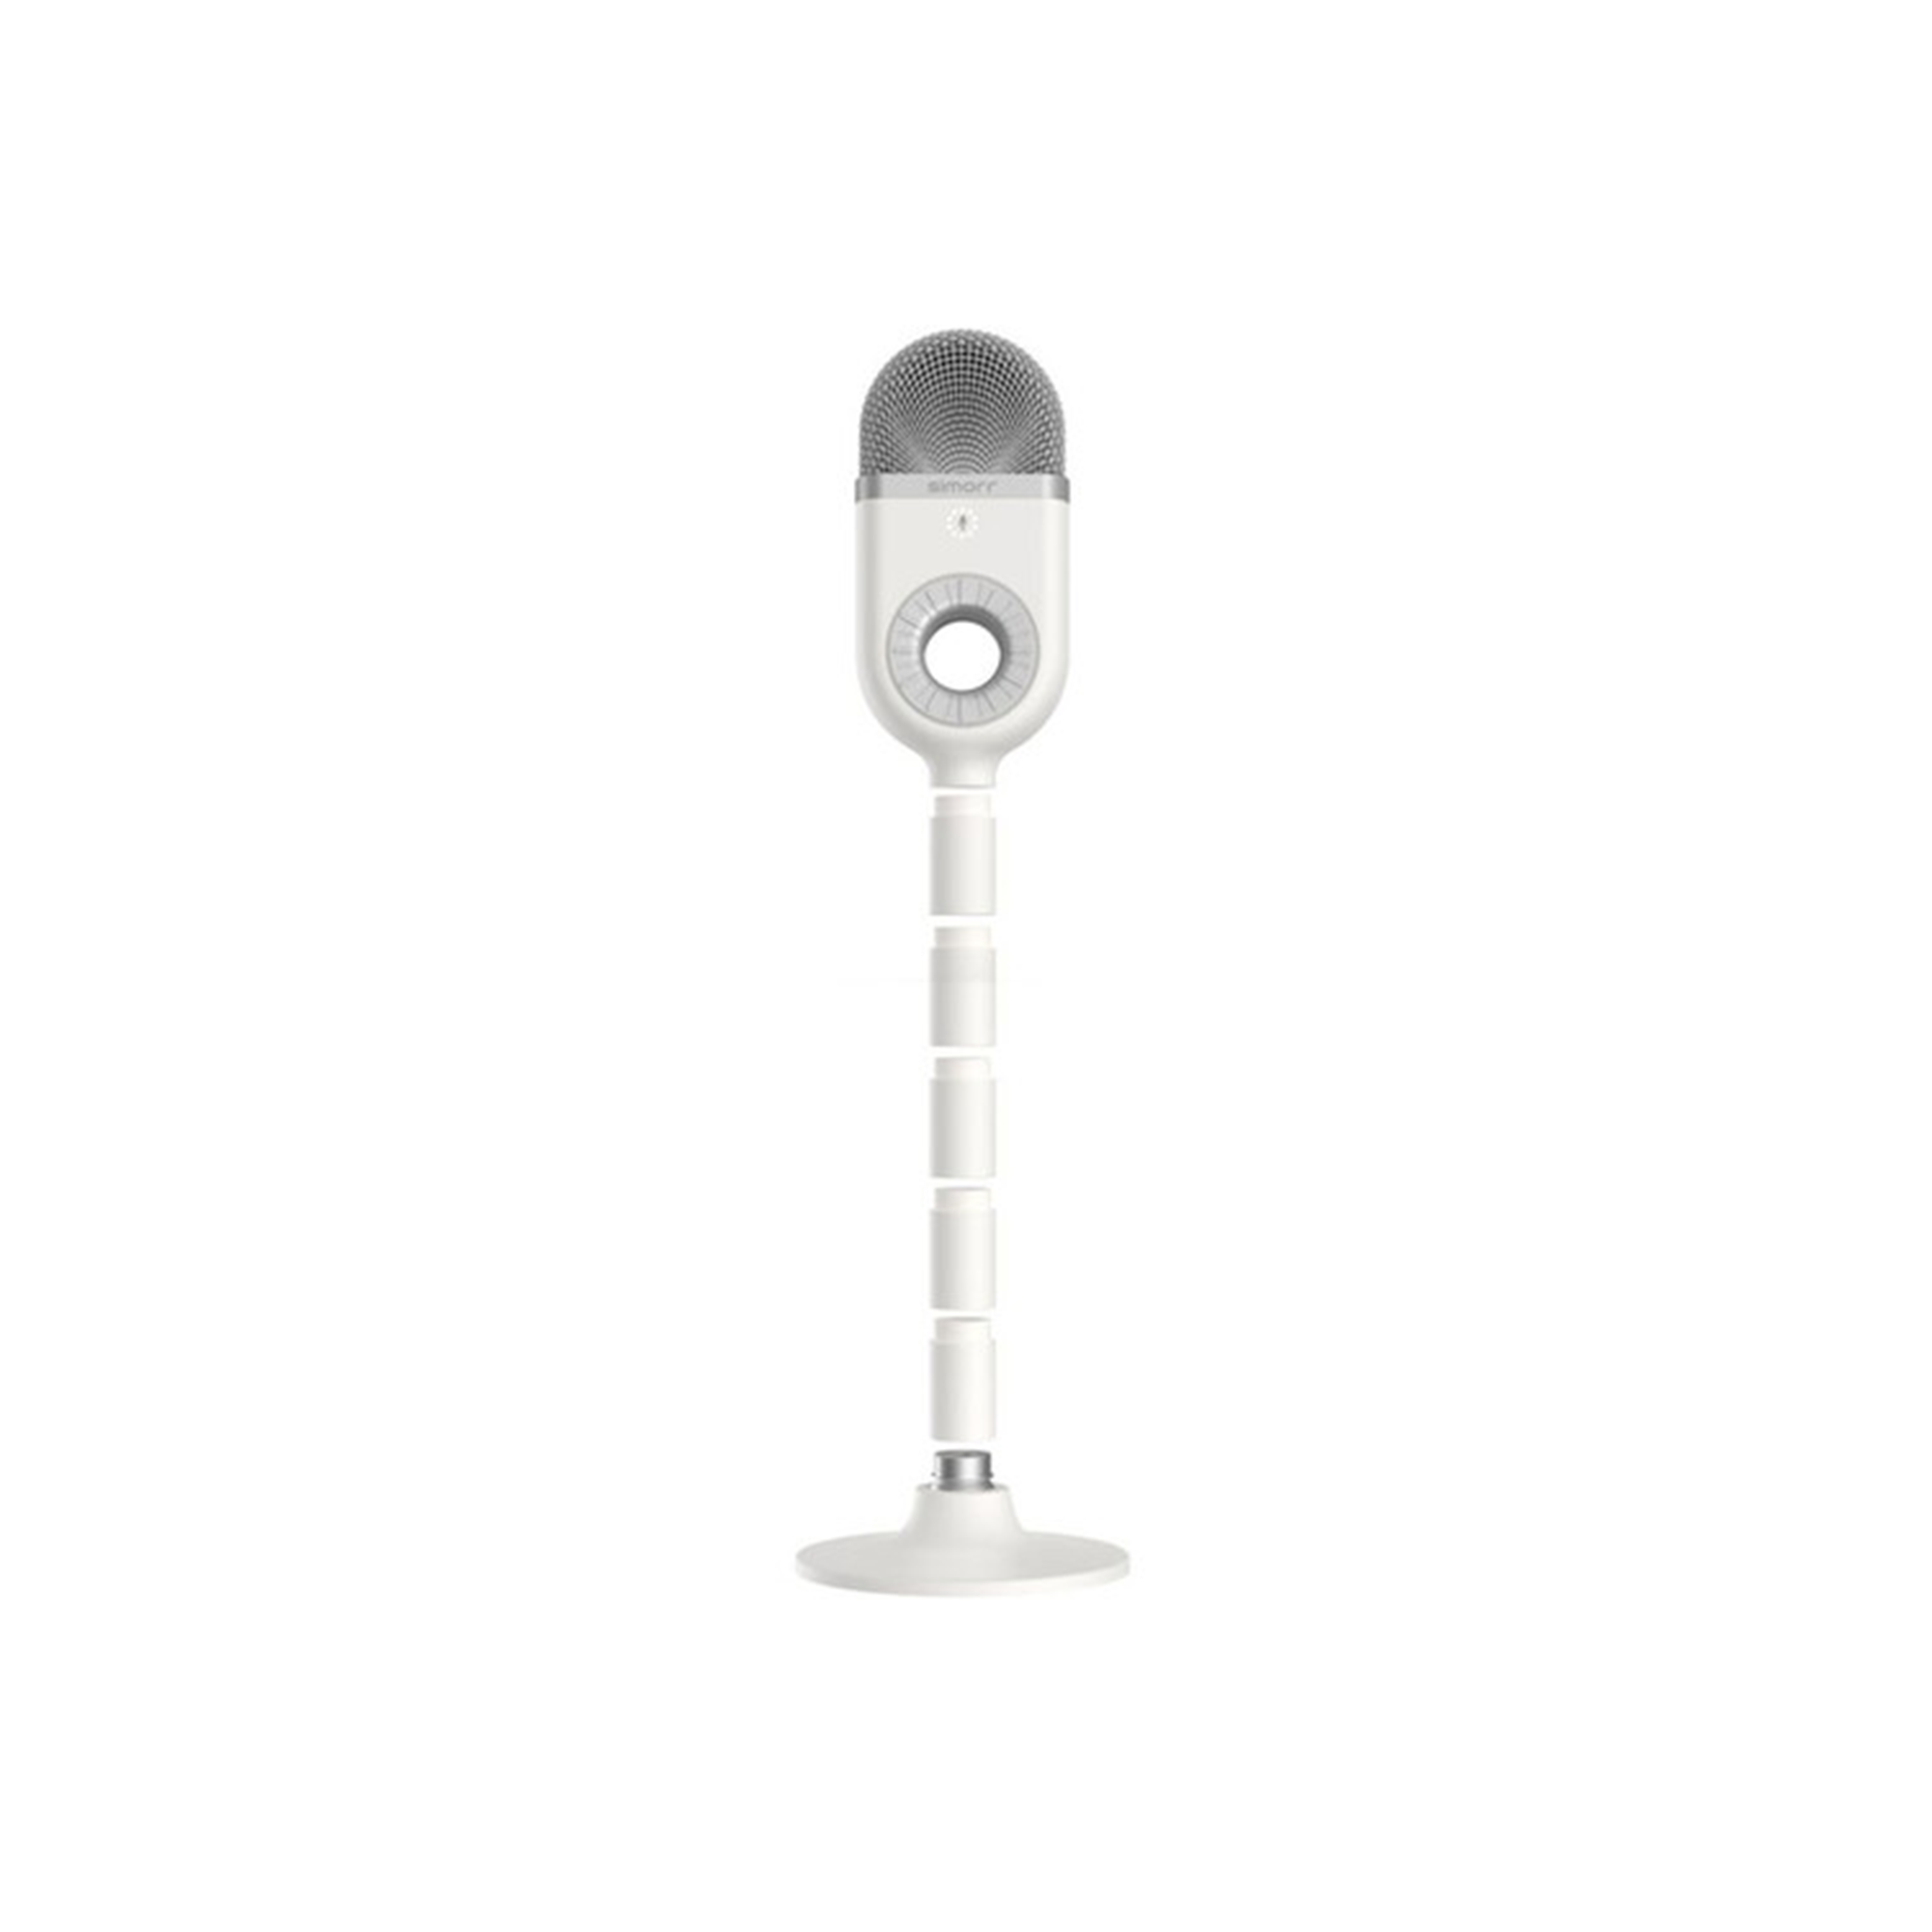 SmallRig simorr Wave U1 USB Condenser Microphone 3492 (White)